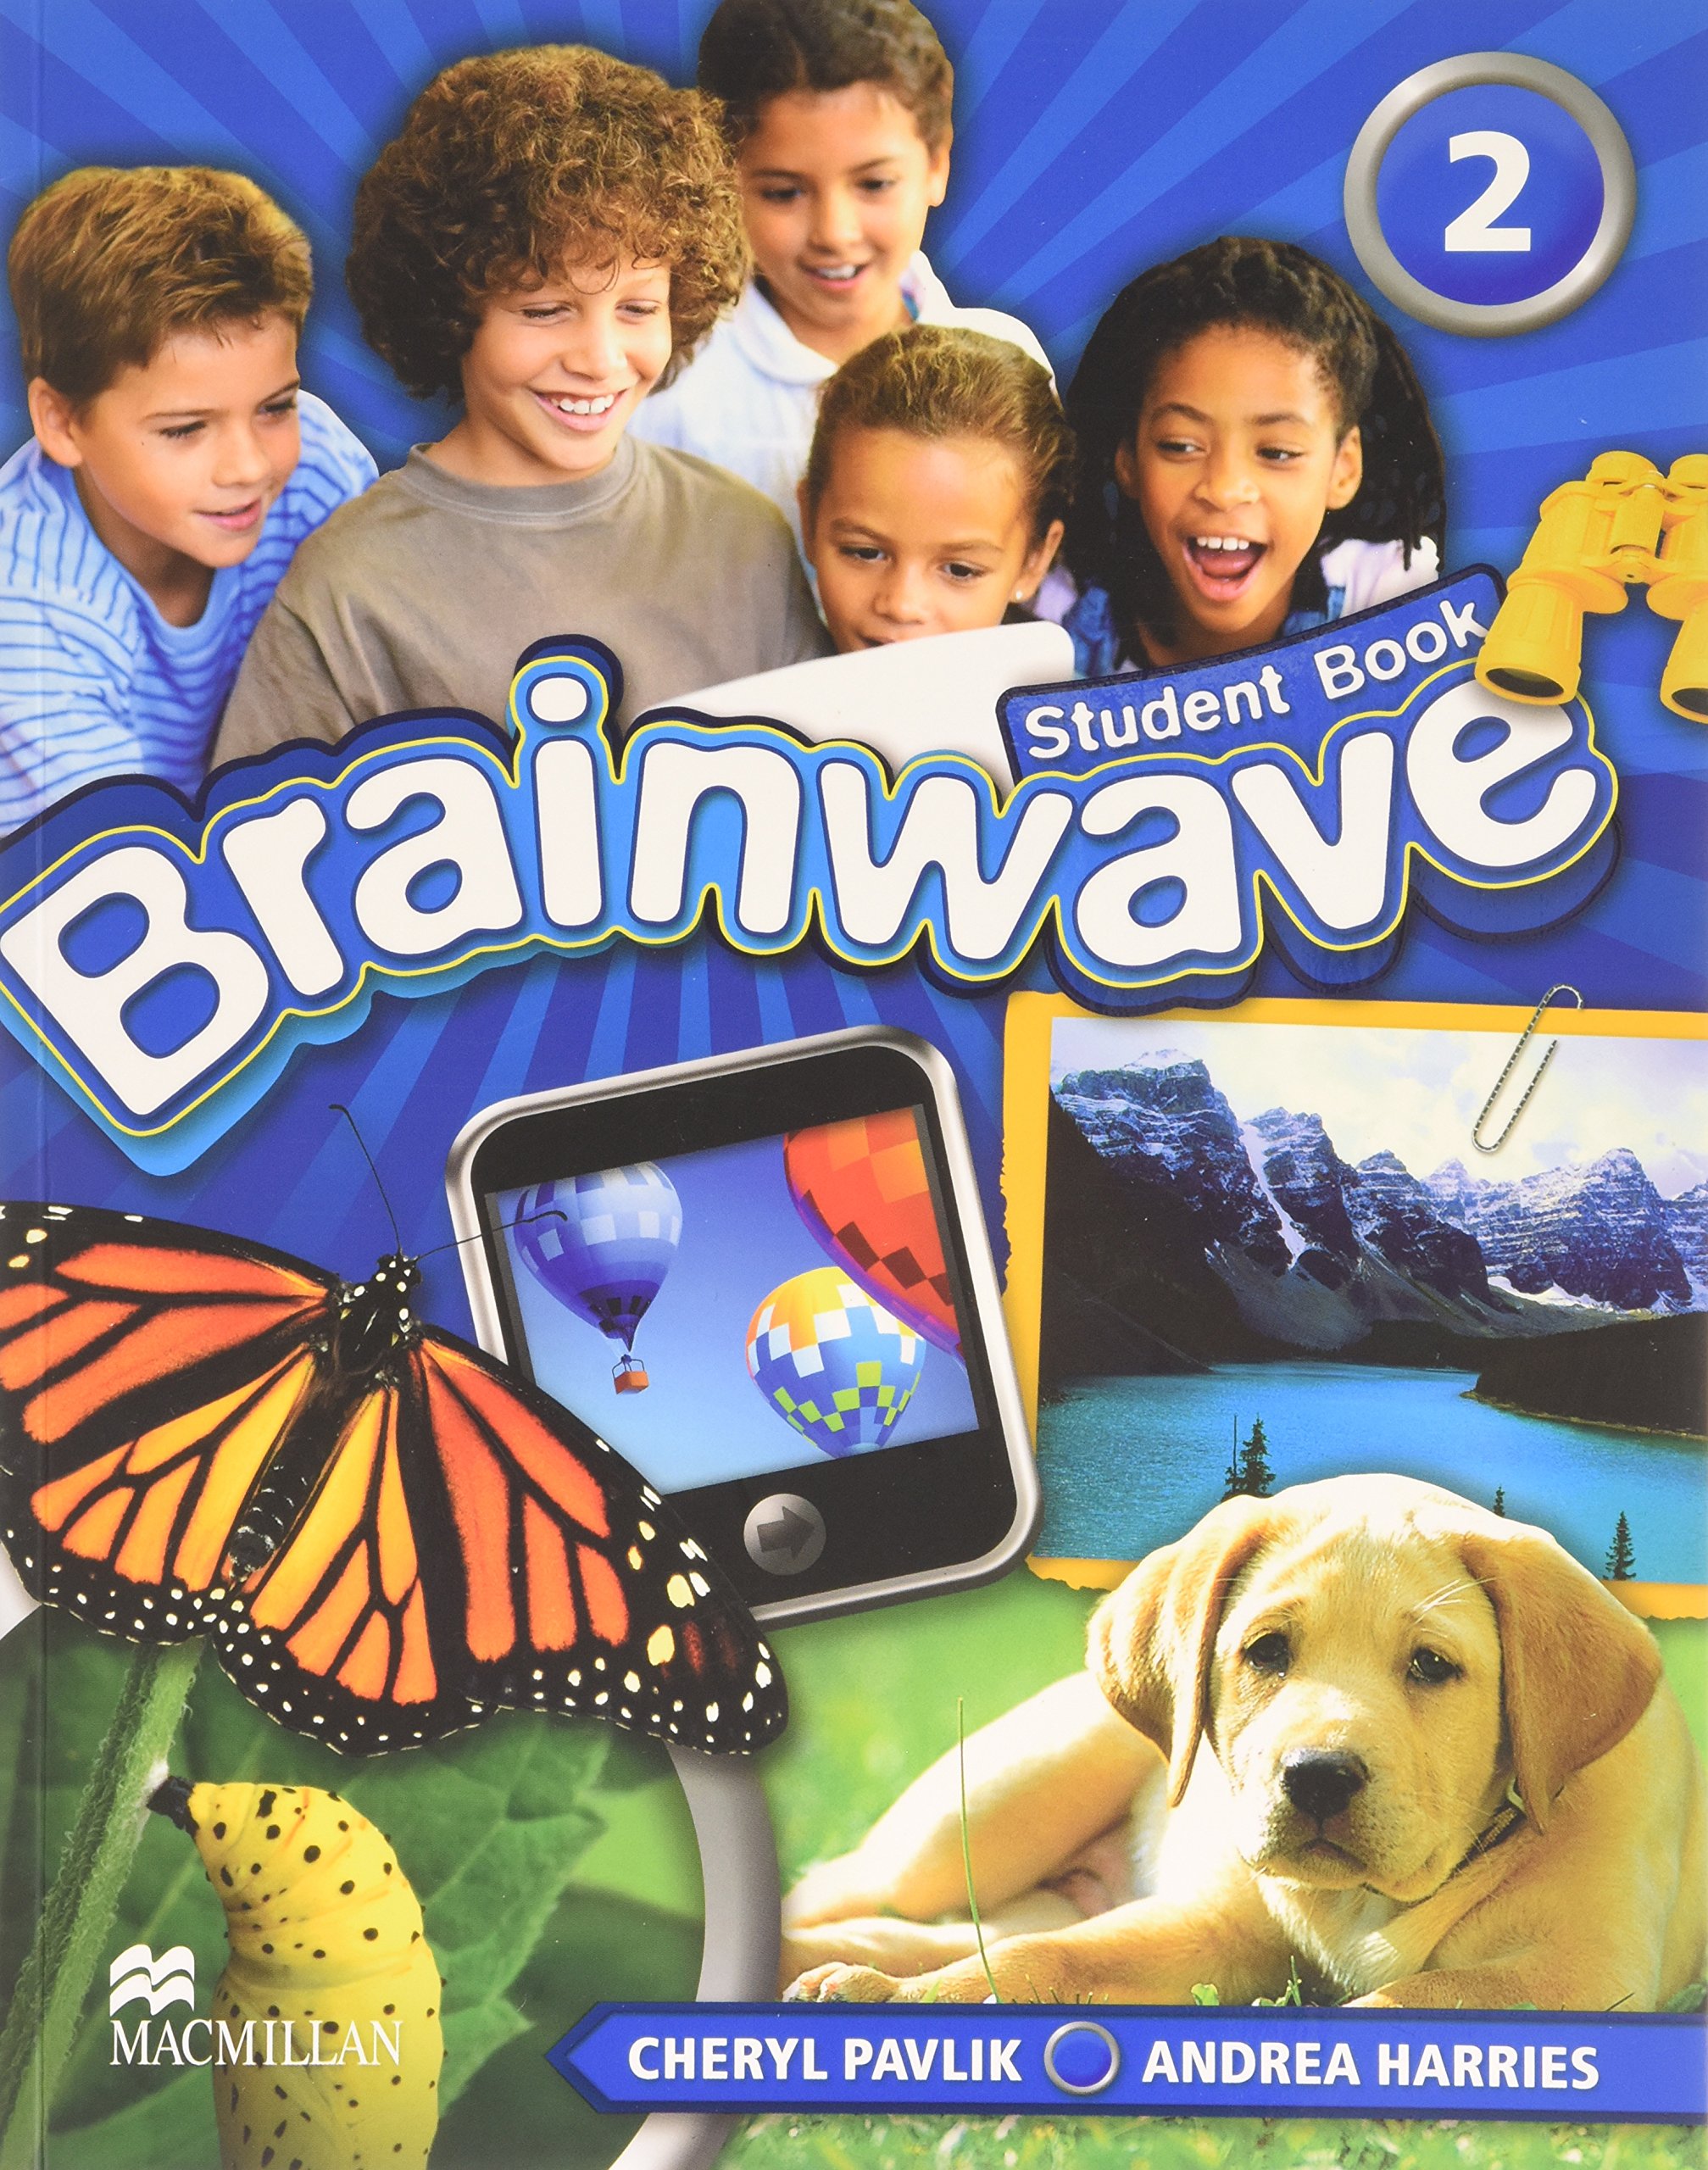 Brainwave 2 - Student Book